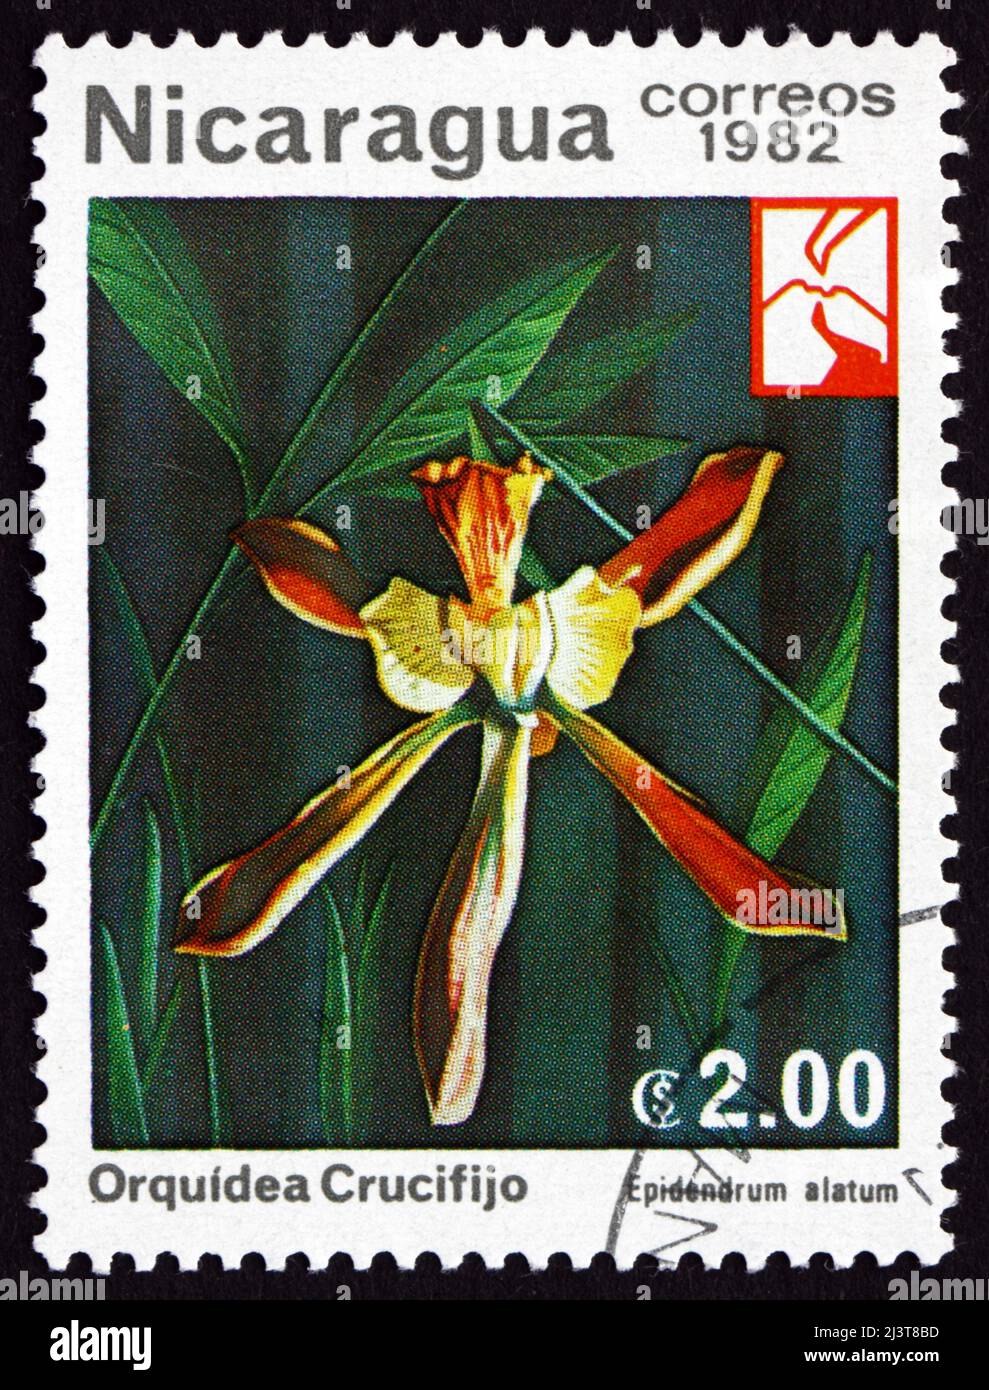 NICARAGUA - CIRCA 1982: a stamp printed in Nicaragua shows Epidendrum Alatum, Orchid, circa 1982 Stock Photo